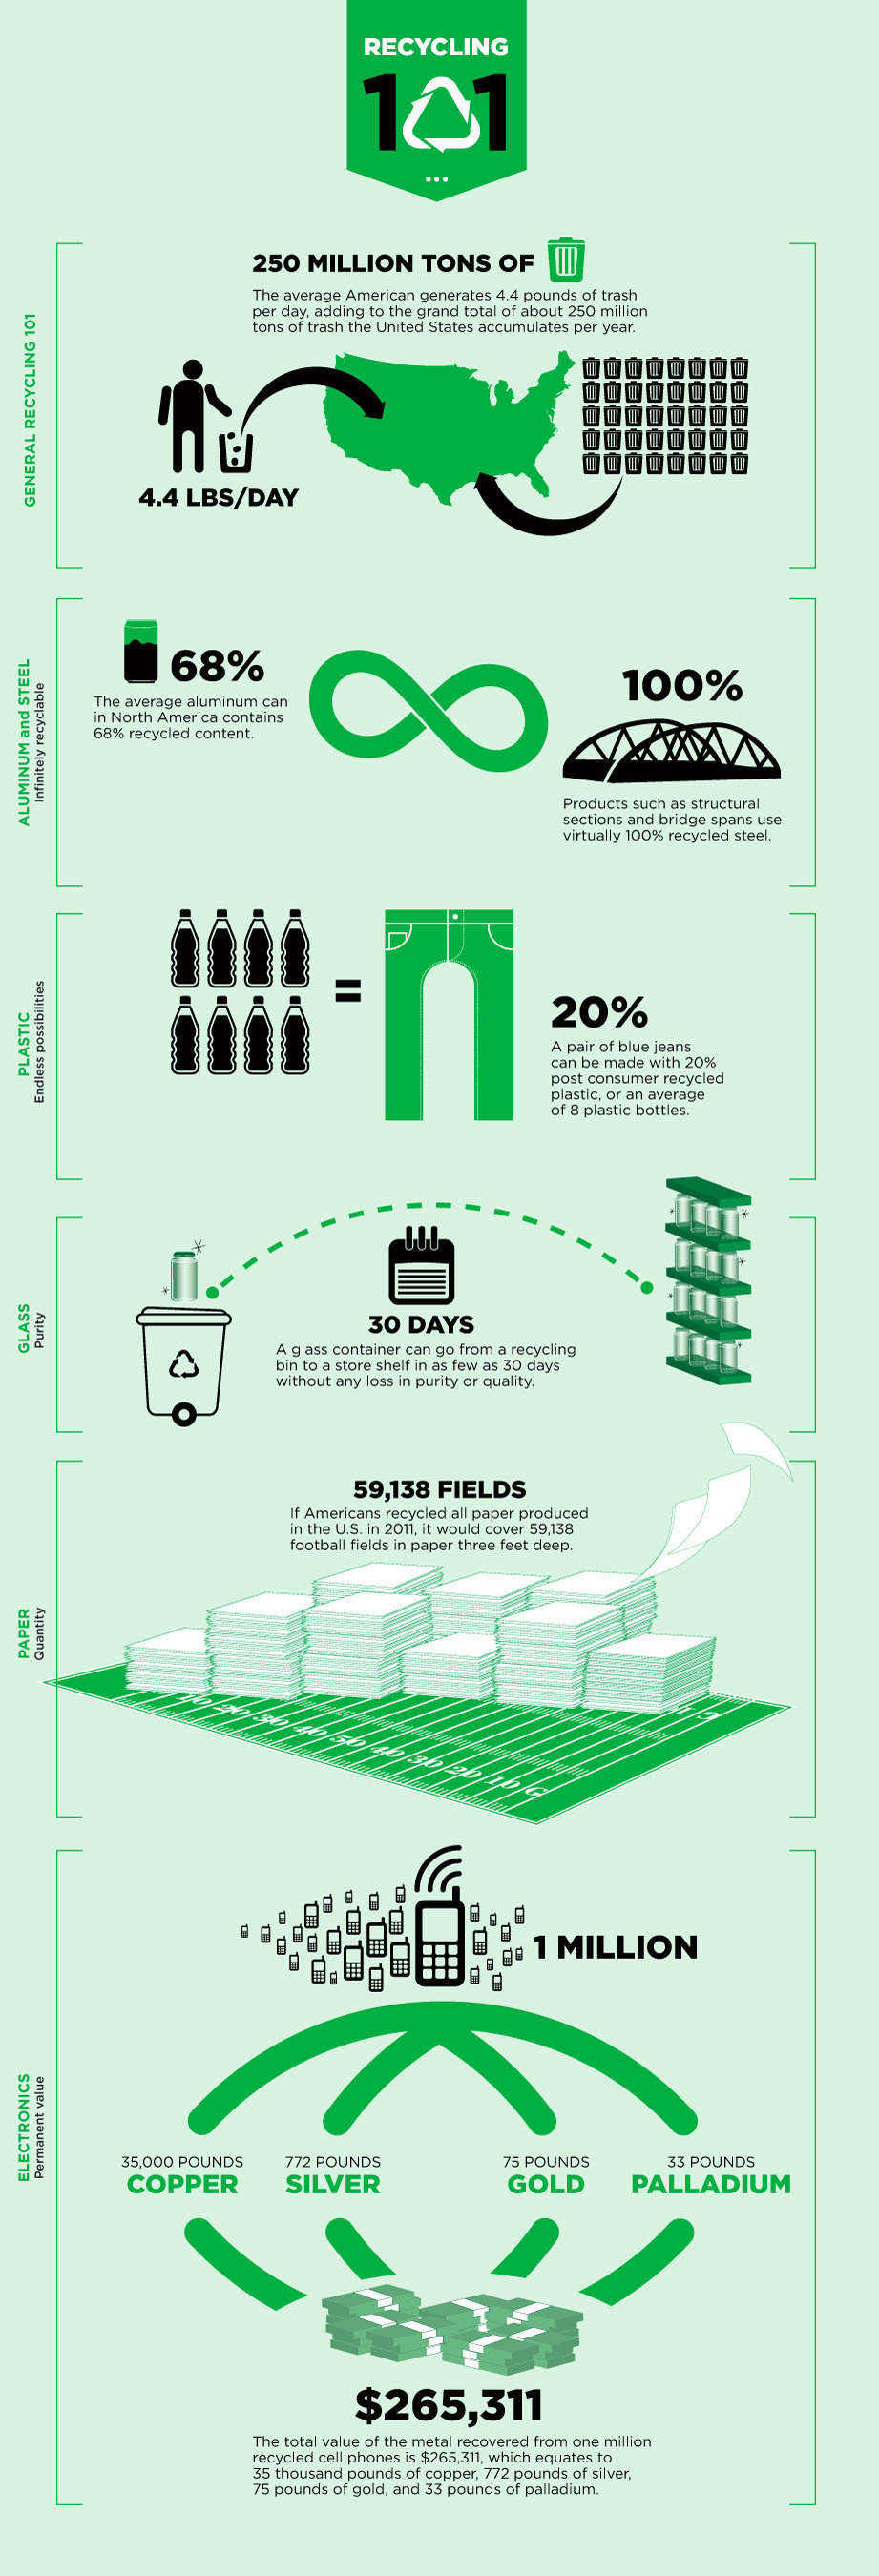 Recycling 101 infographic from America Recycles Day. (PRNewsFoto/Keep America Beautiful) (PRNewsFoto/KEEP AMERICA BEAUTIFUL)